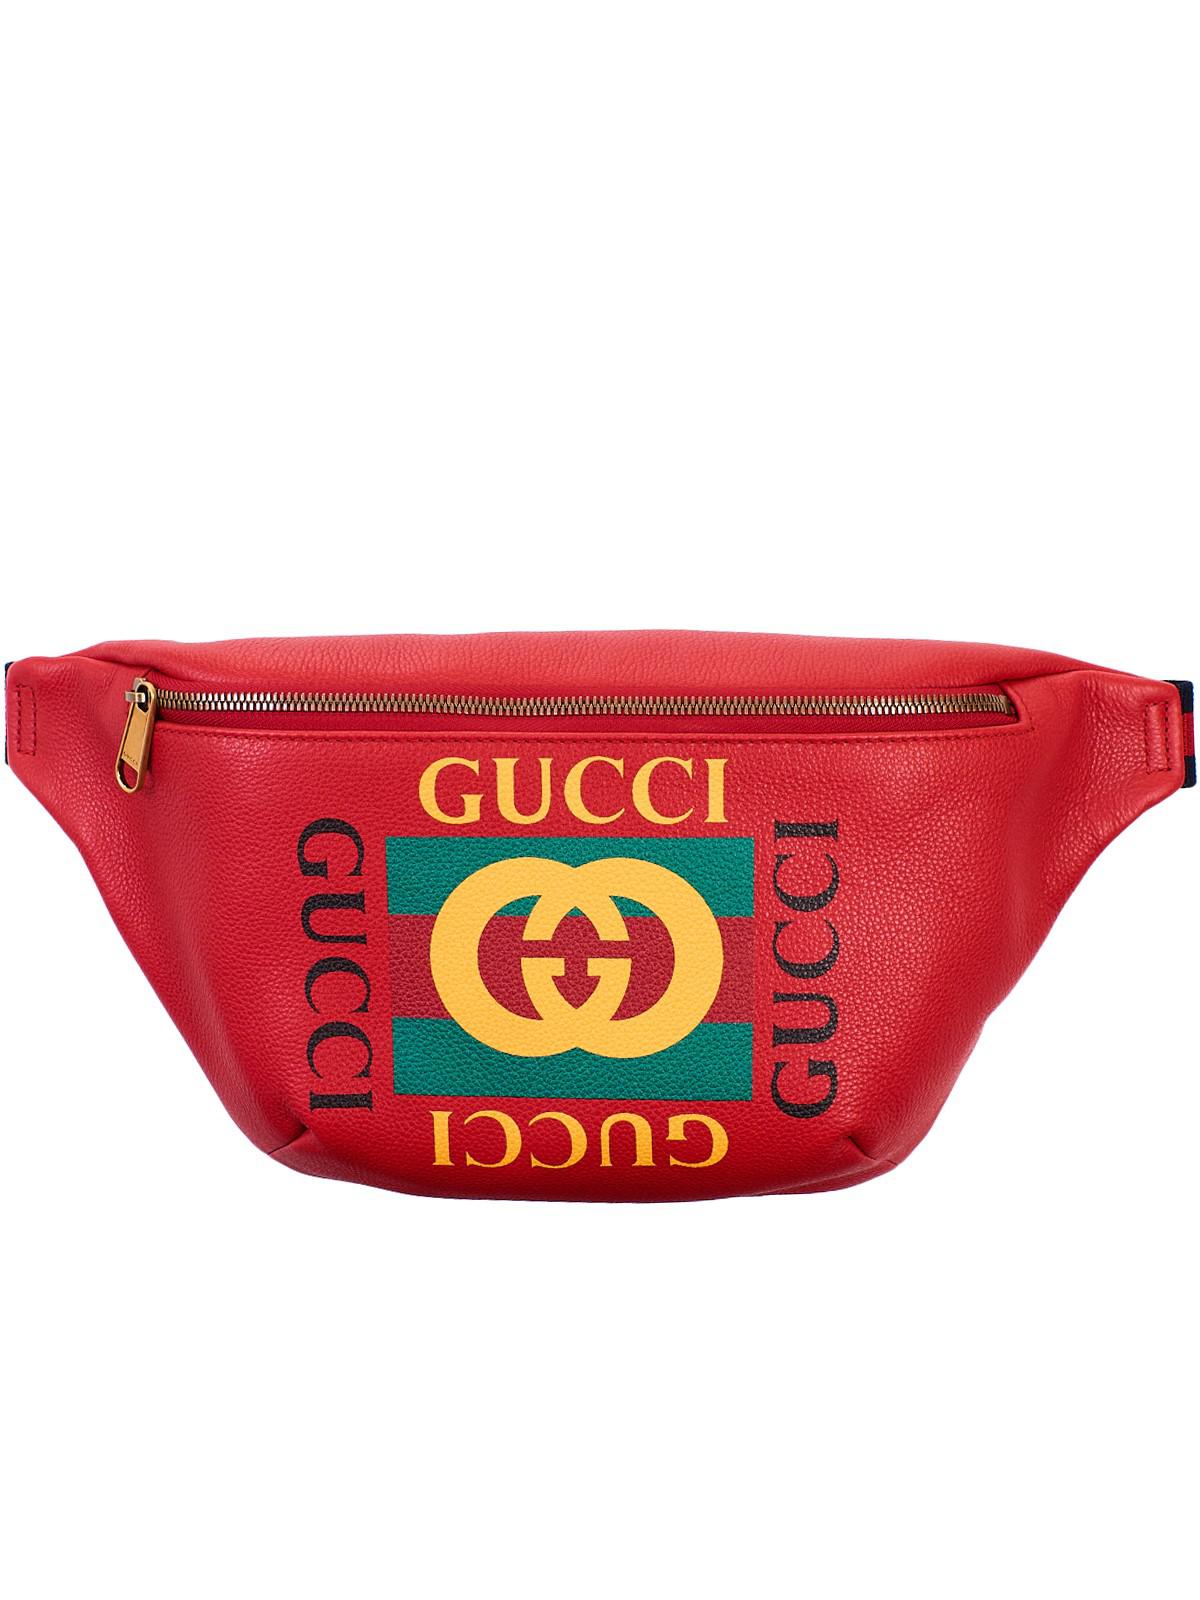 belt bag gucci red